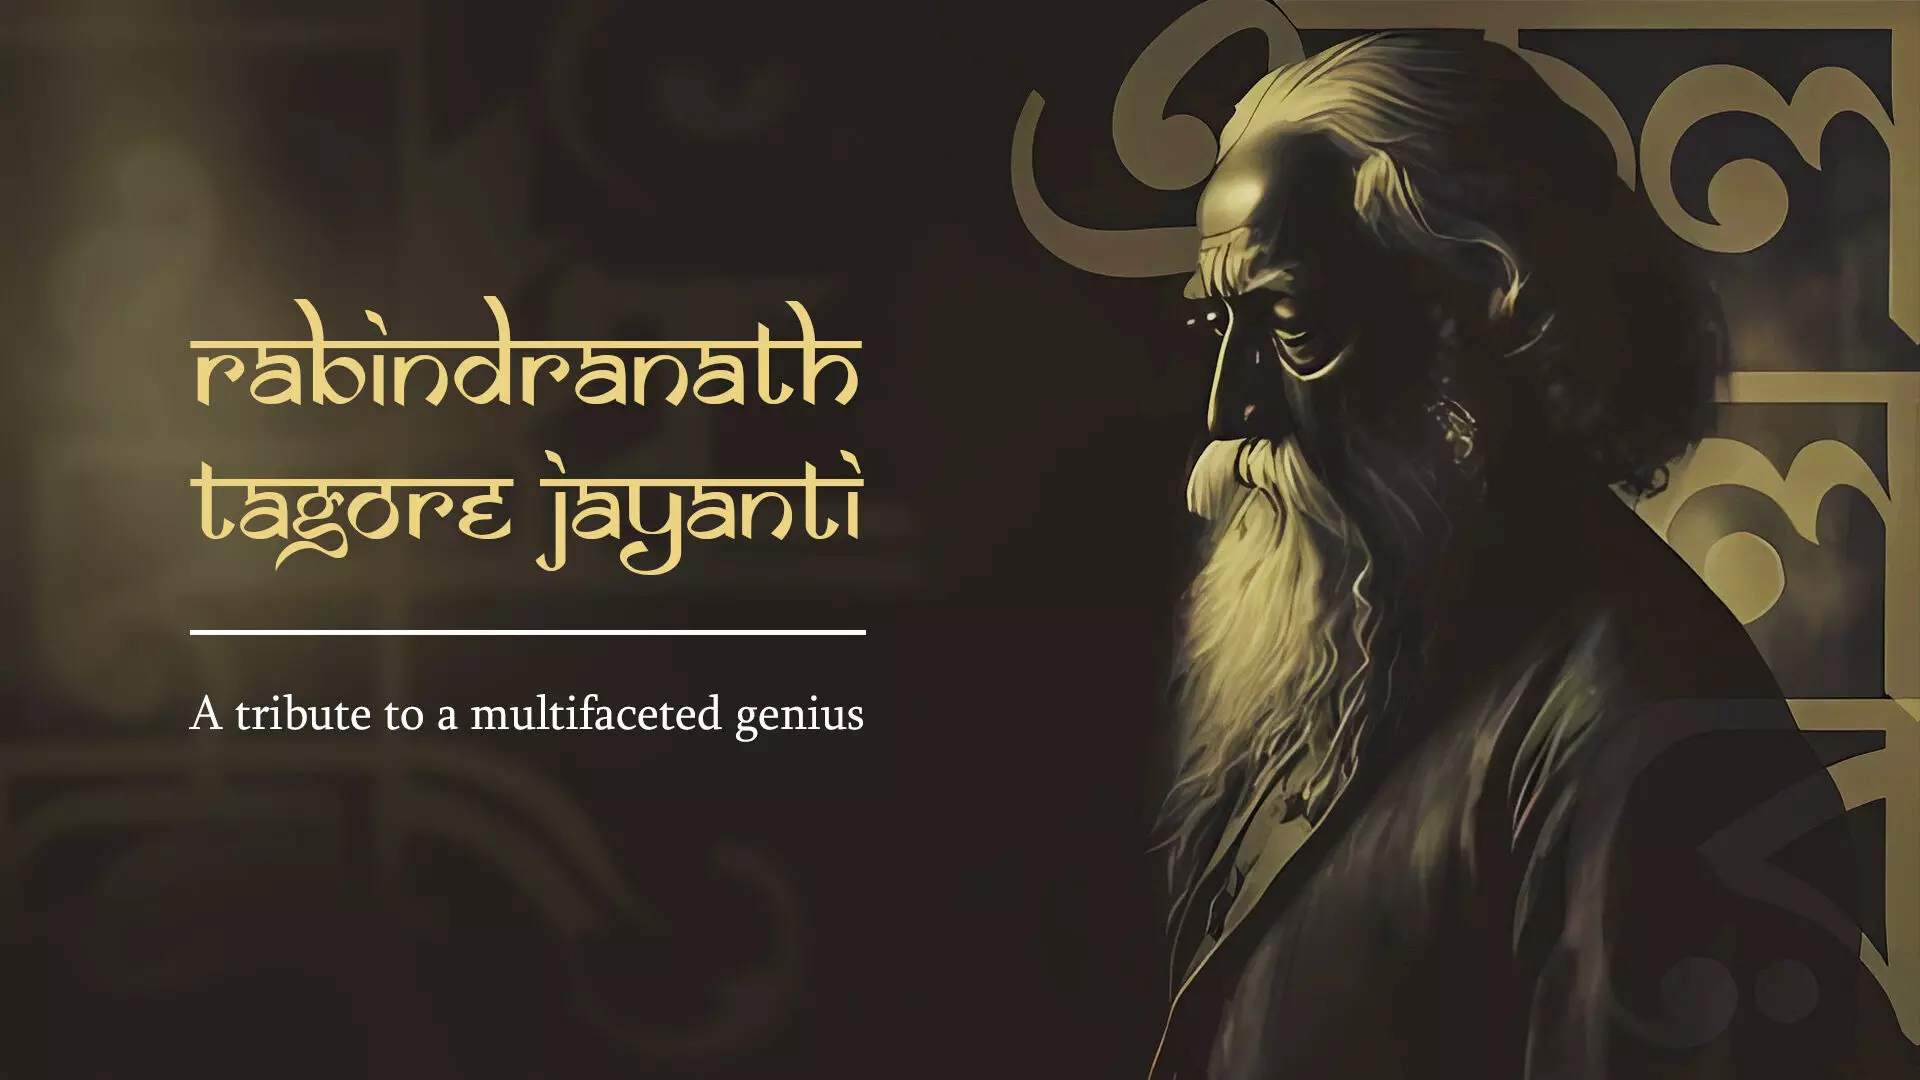 When is Rabindranath Tagore Jayanti celebrated?